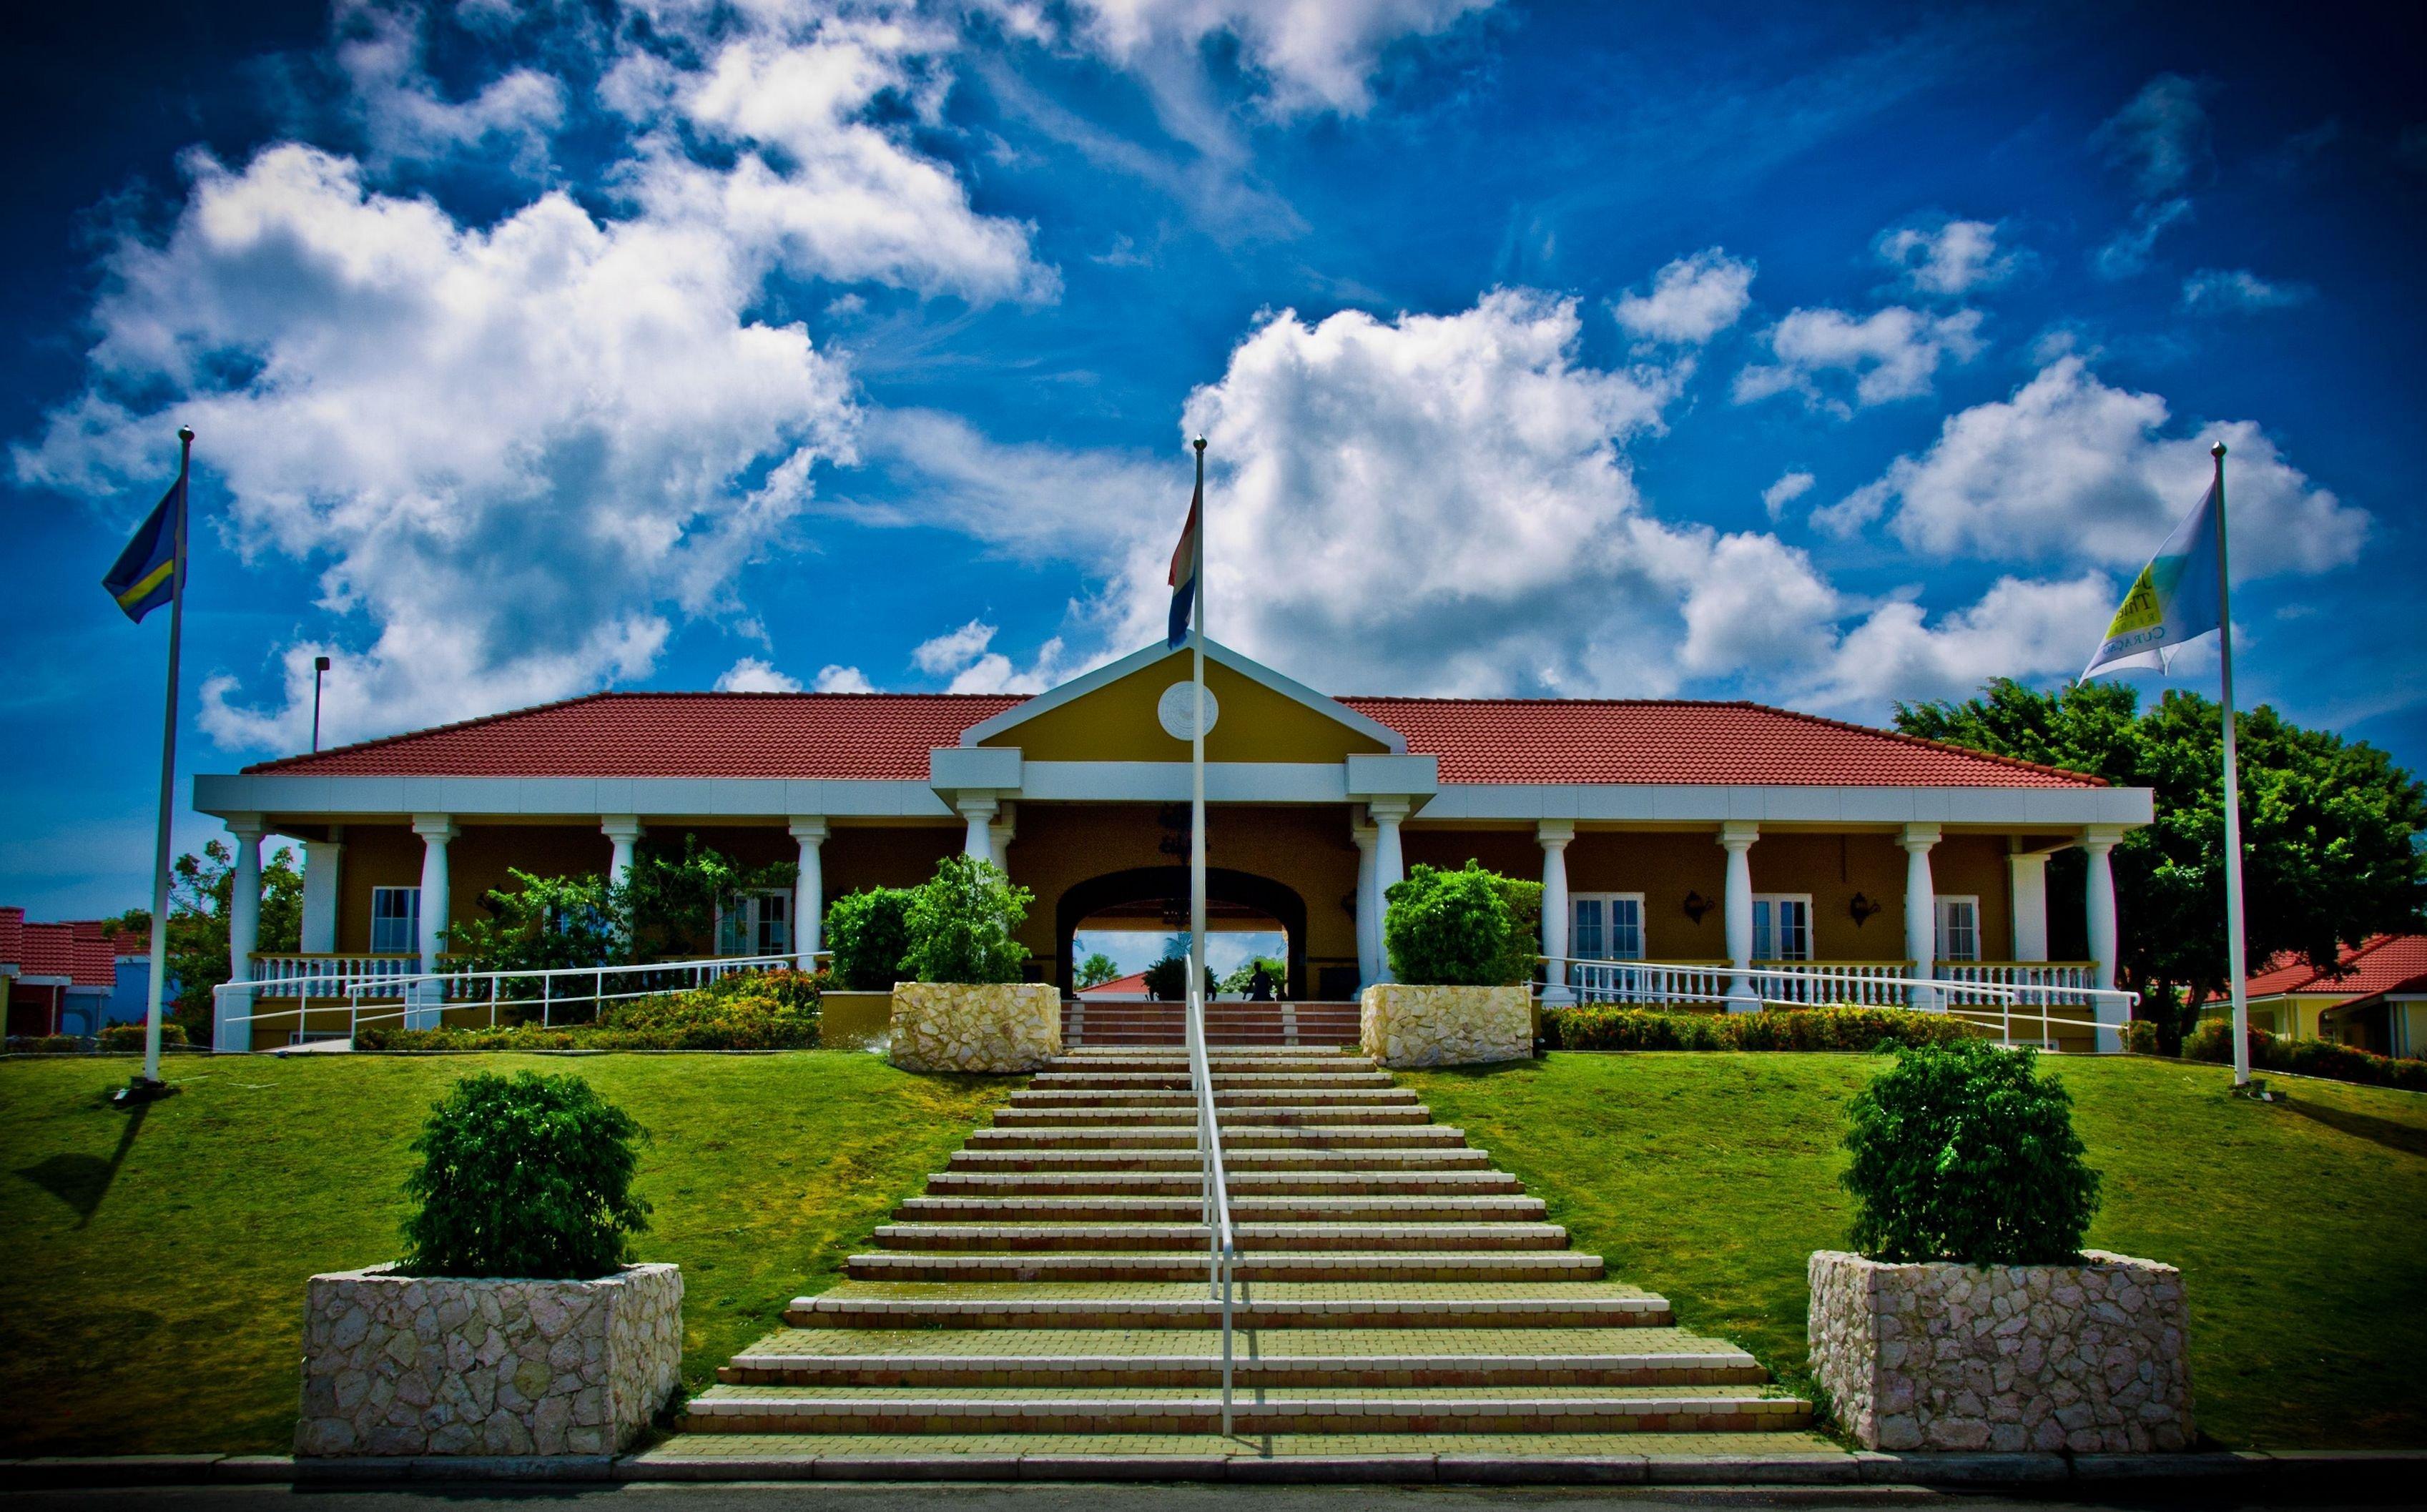 Livingstone Jan Thiel Resort in Curacao, Curacao